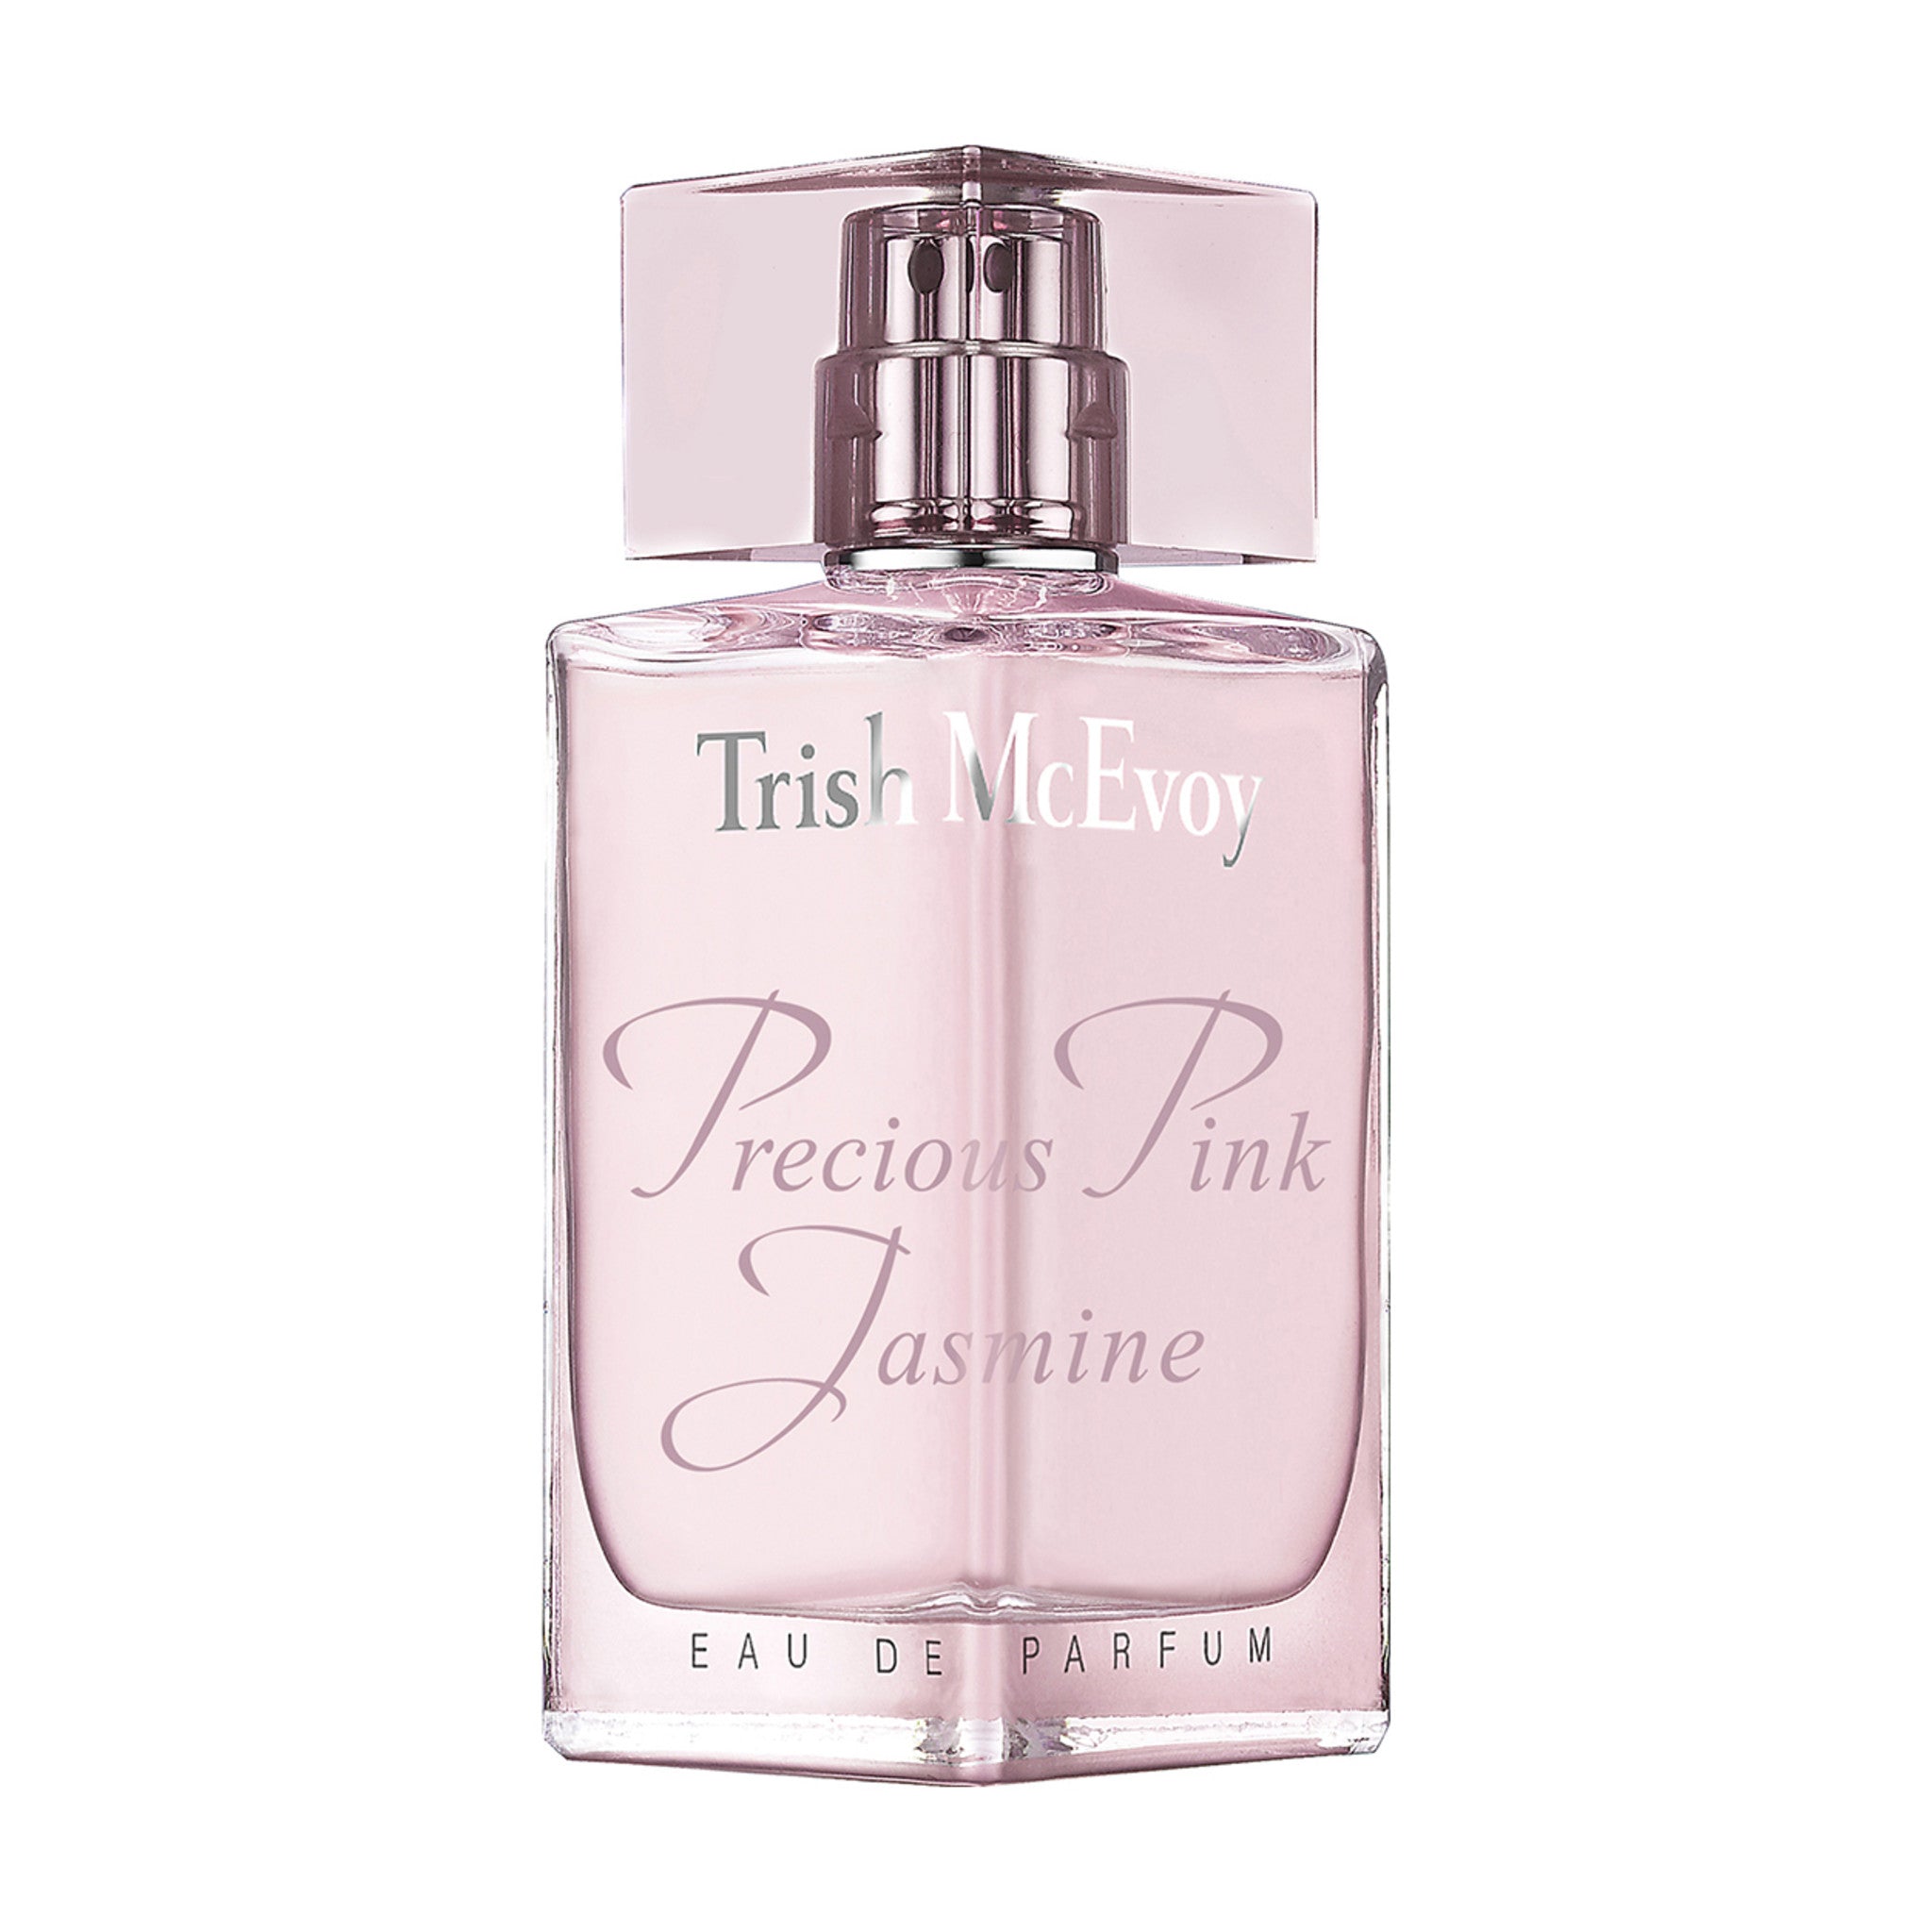 Trish McEvoy Precious Pink Jasmine Eau de Parfum main image.